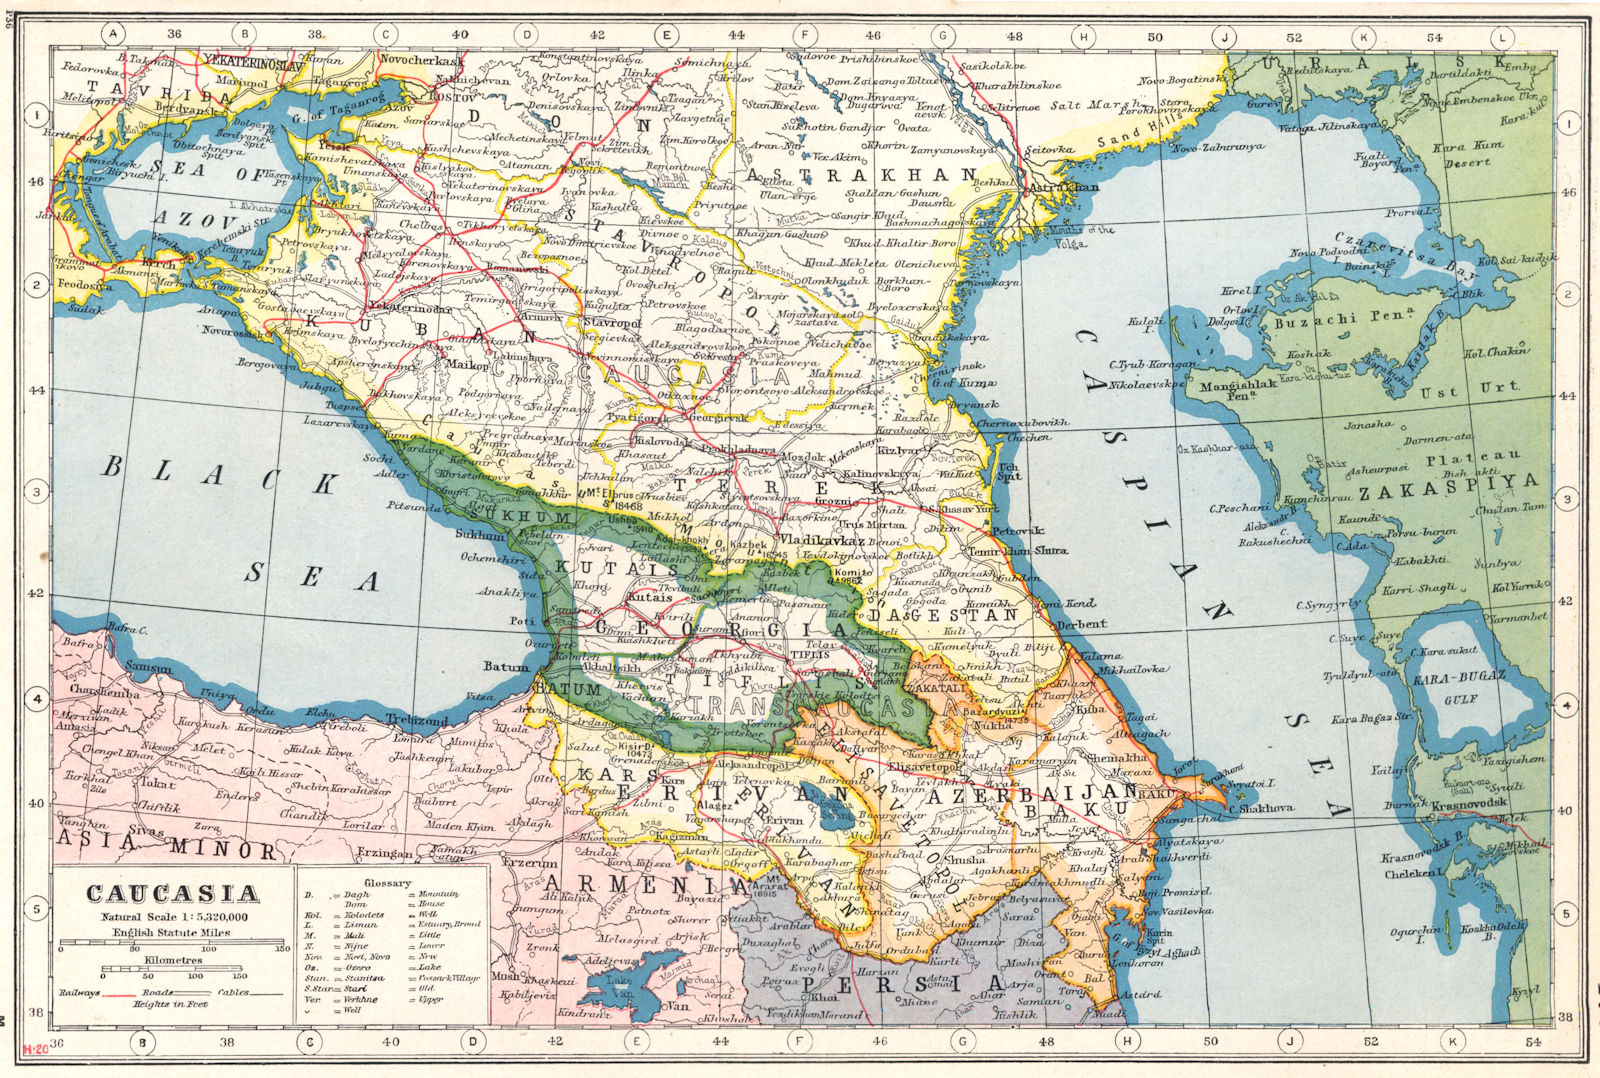 CAUCASIA CAUCASUS. Georgia Armenia Azerbaijan Russia Erivan. Eurasia 1920 map